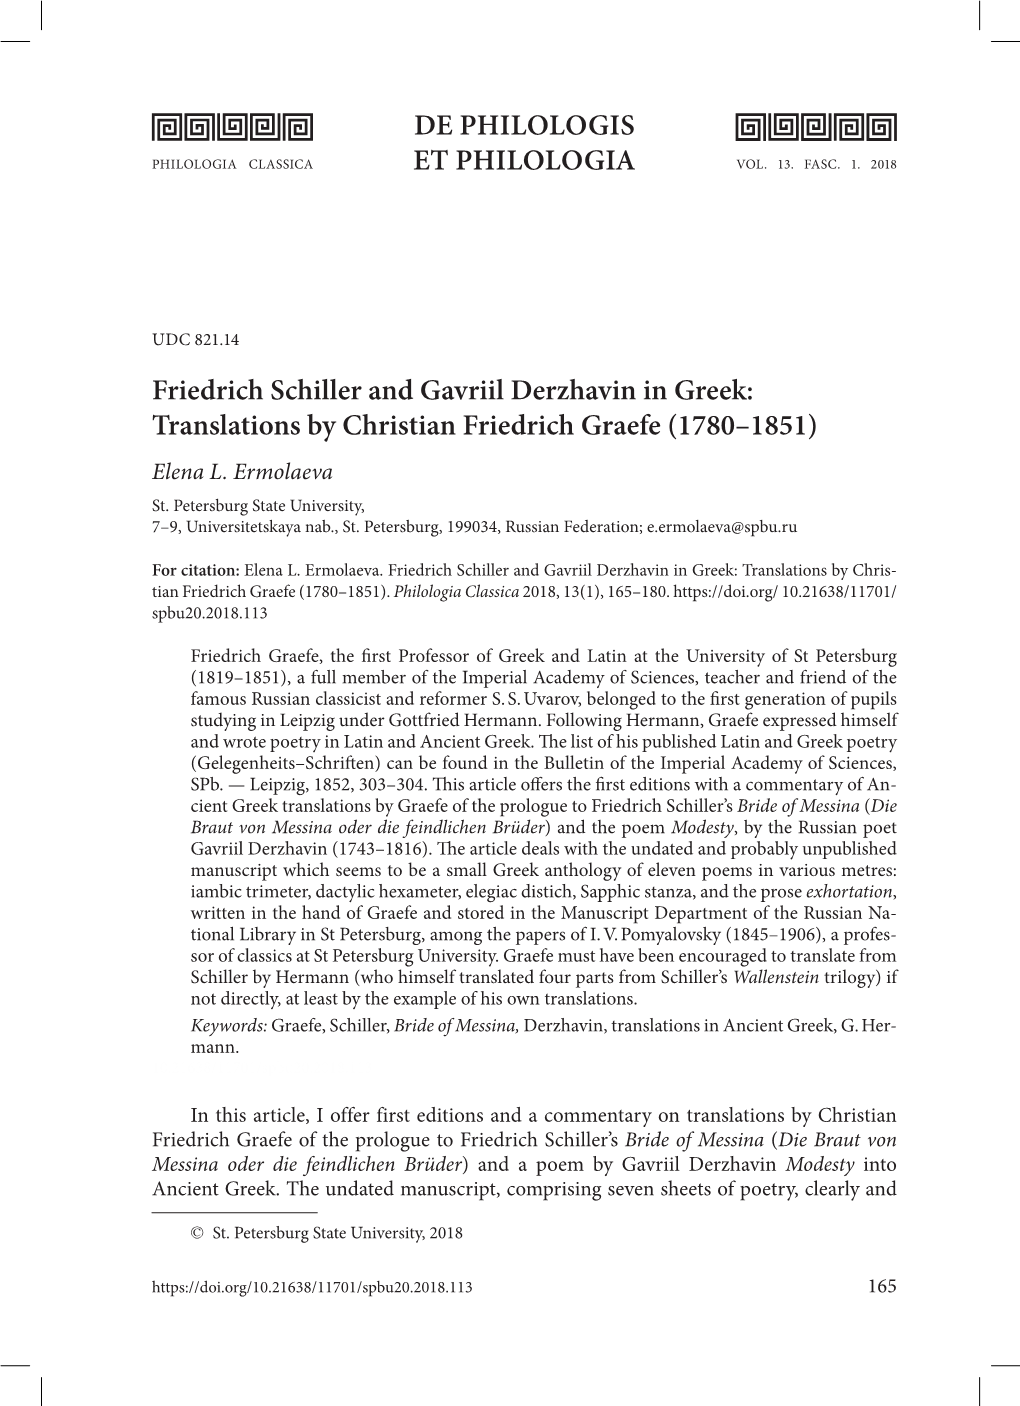 Elena L. Ermolaeva. Friedrich Schiller and Gavriil Derzhavin in Greek Translations by Christian Friedrich Graefe